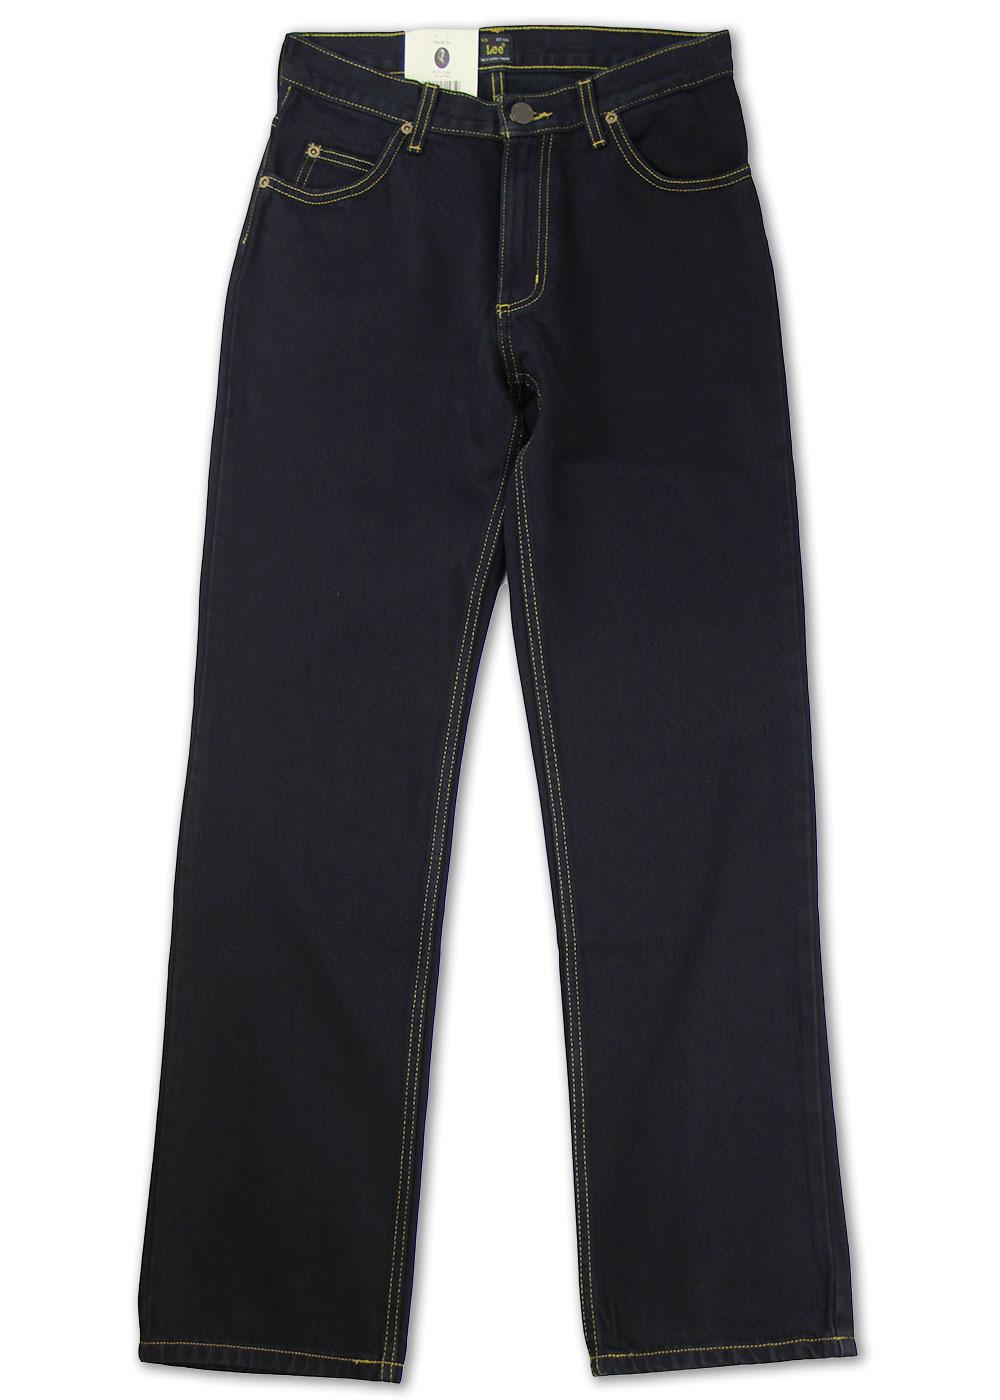 LEE Brooklyn Jeans Black Rinse Men's New Regular Comfort Fit Denim